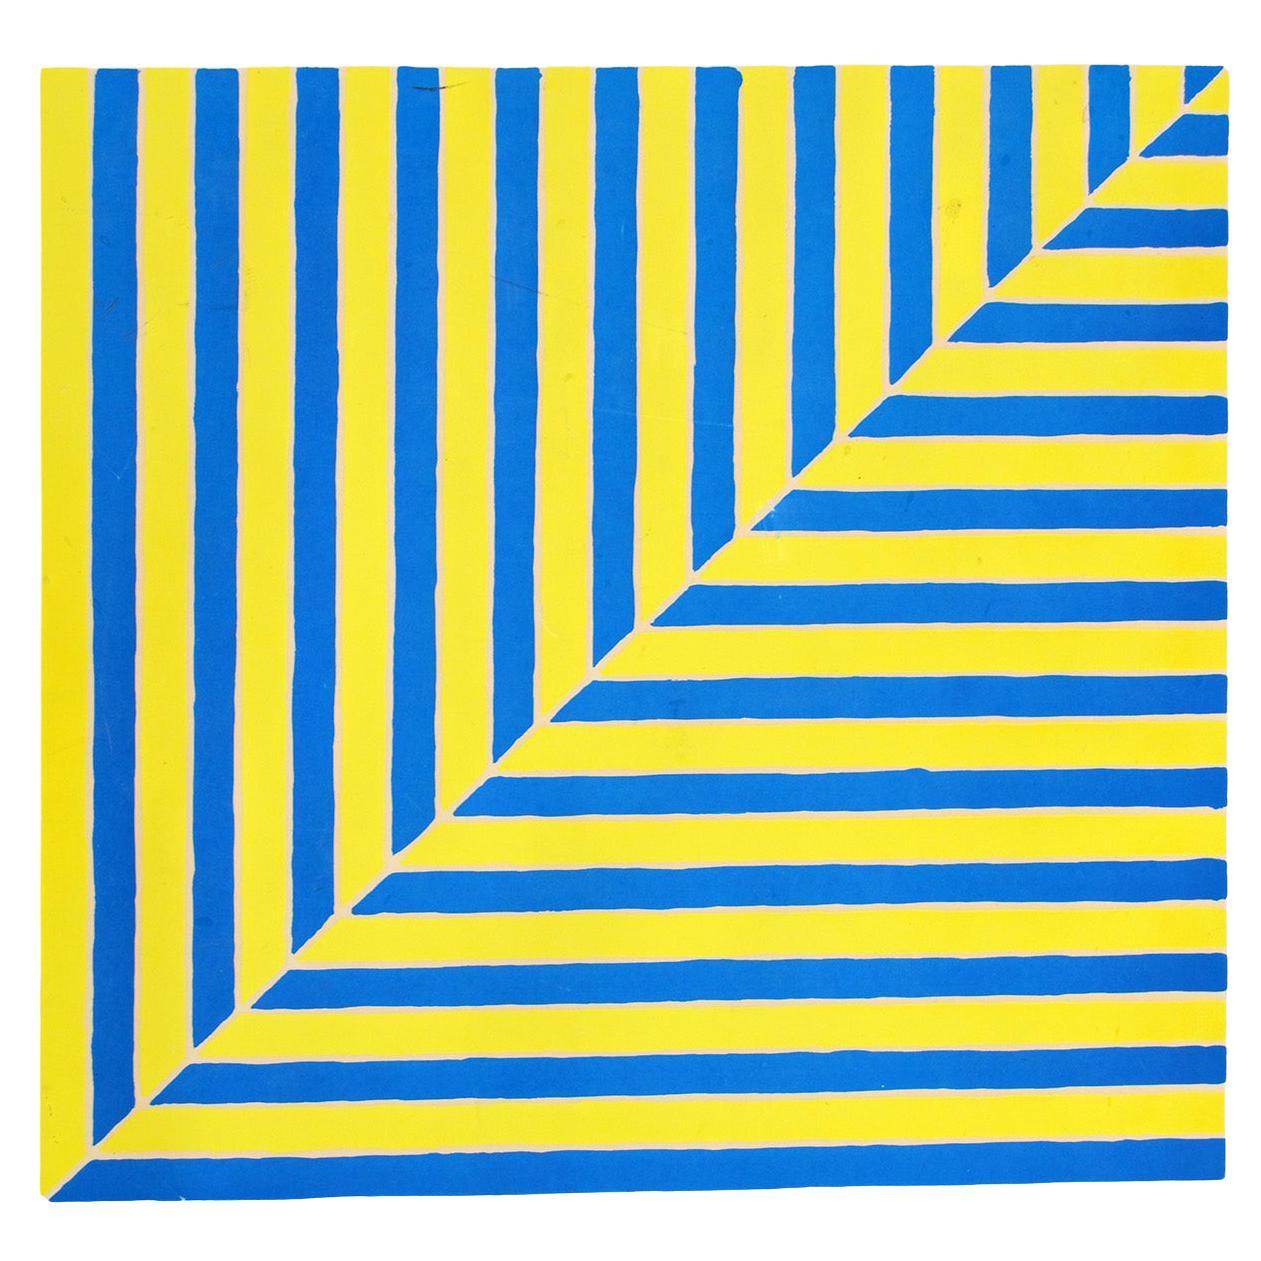 Frank Stella (b. 1936) “Rabat” Abstract Screenprint Unframed Edition of 500